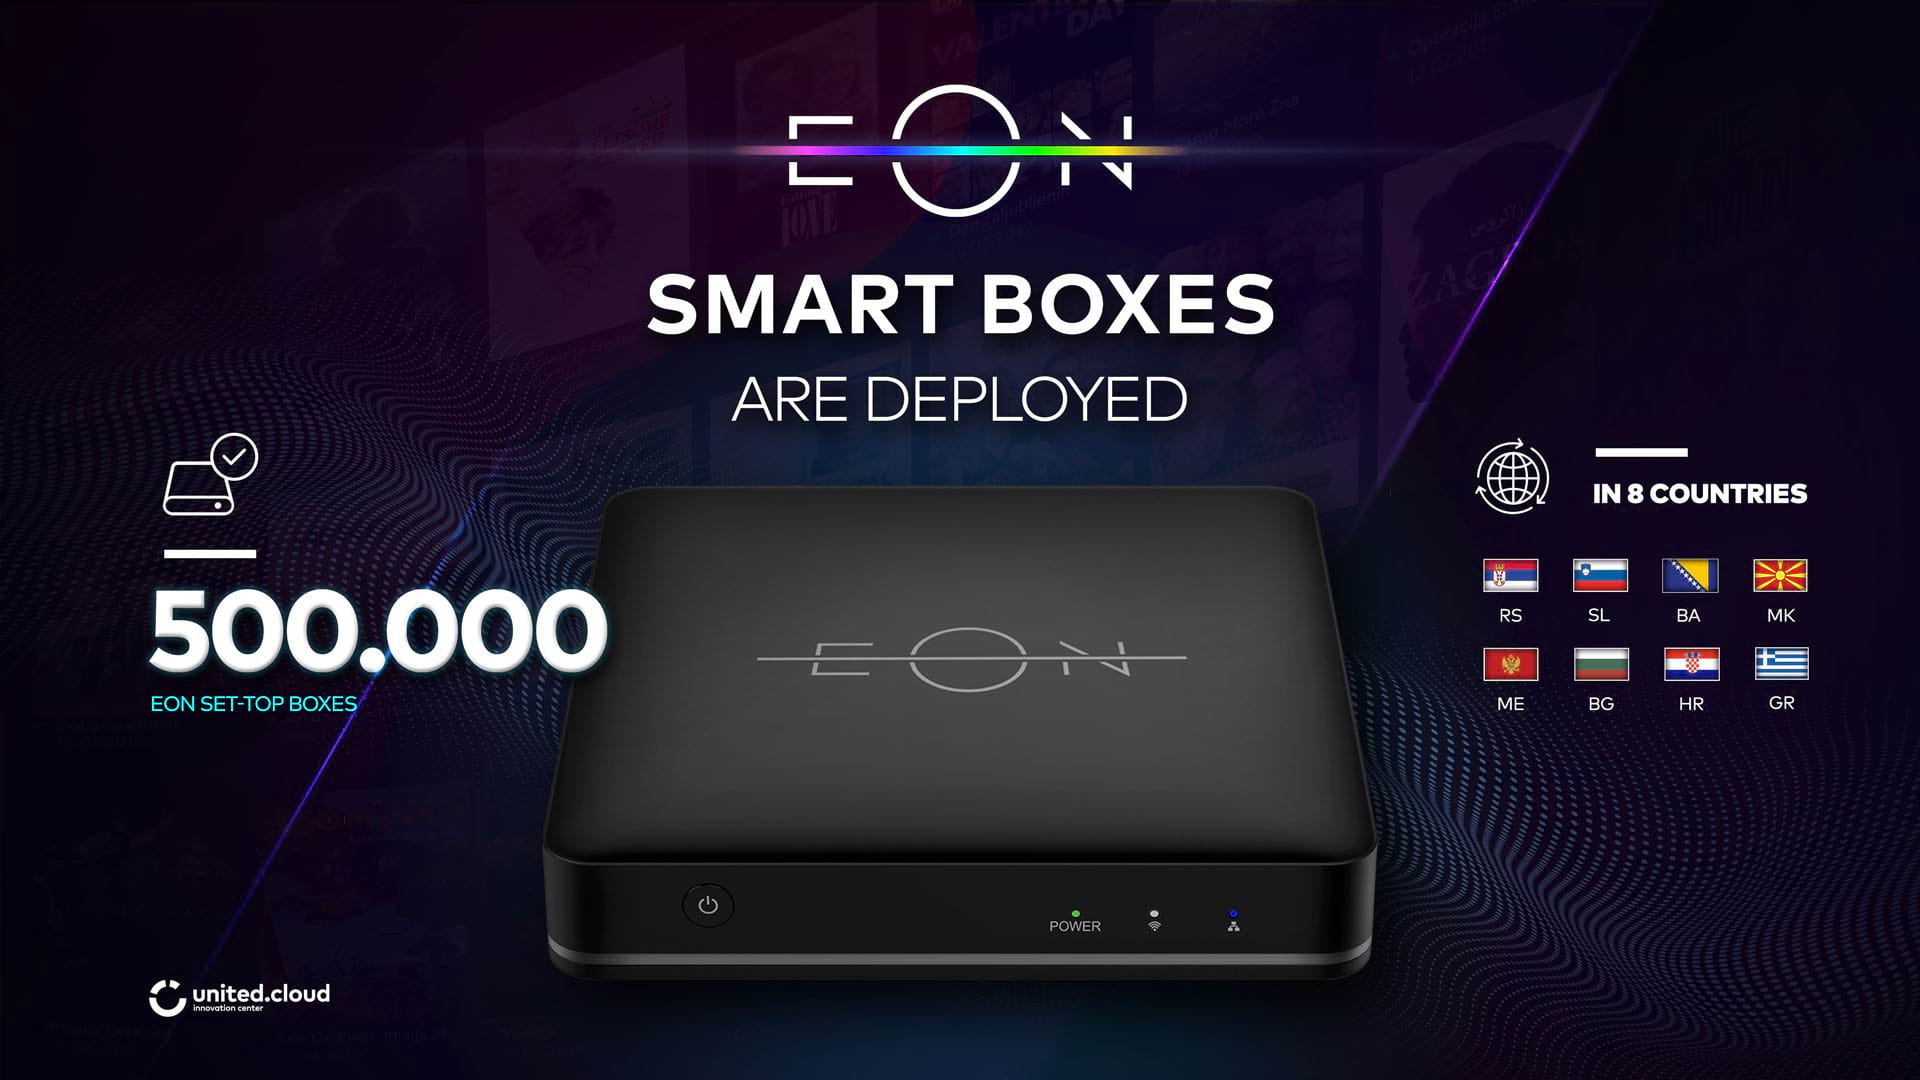 HALF A MILLION EON TV SMART BOXES DEPLOYED